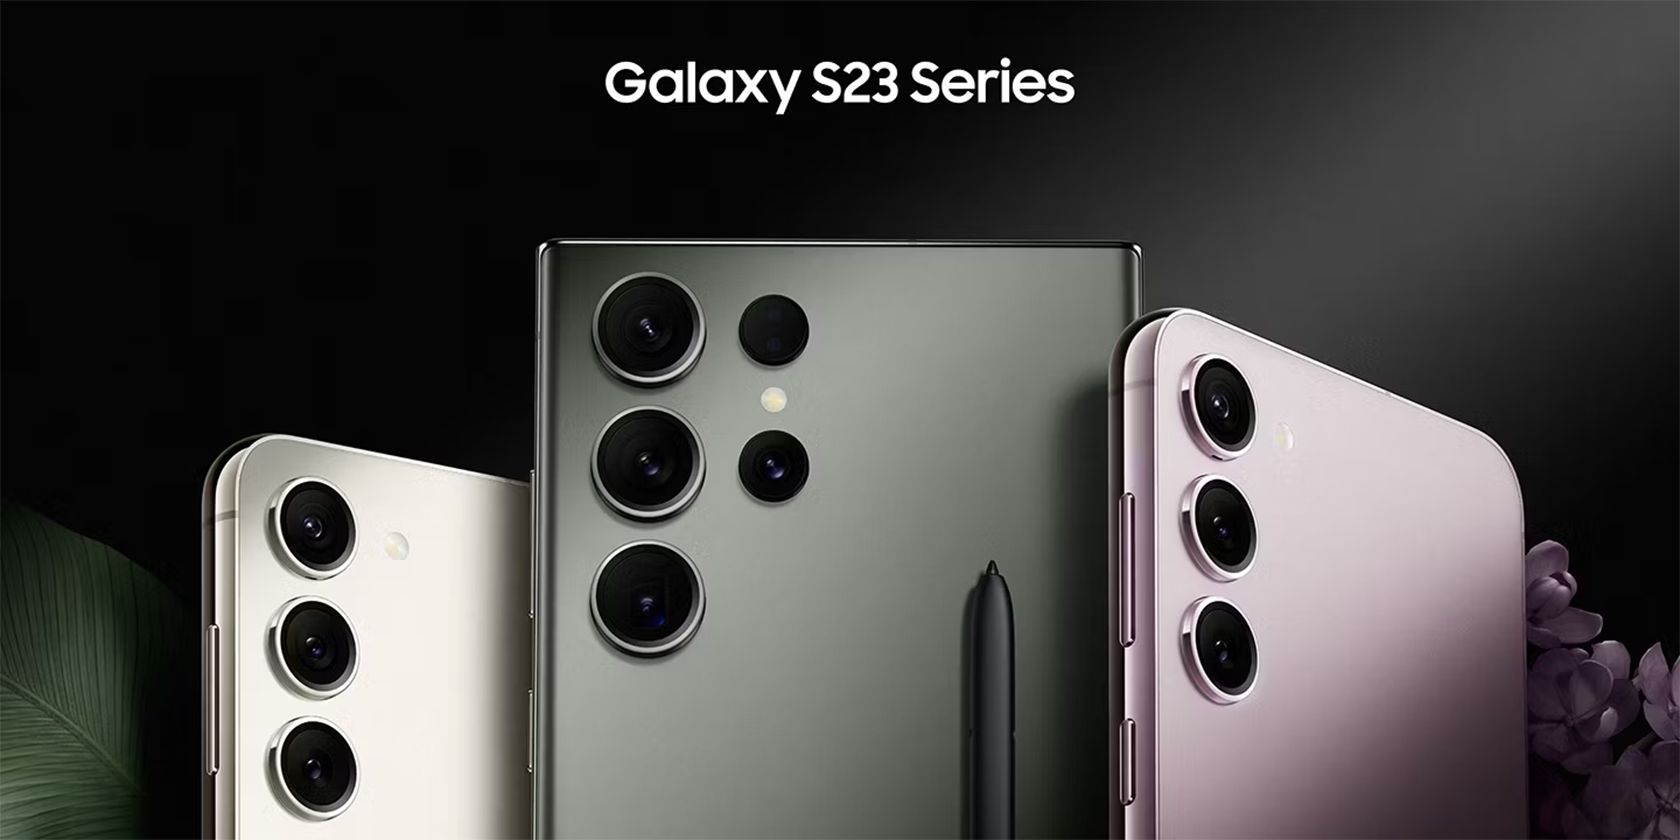 The Samsung Galaxy S23 Lineup